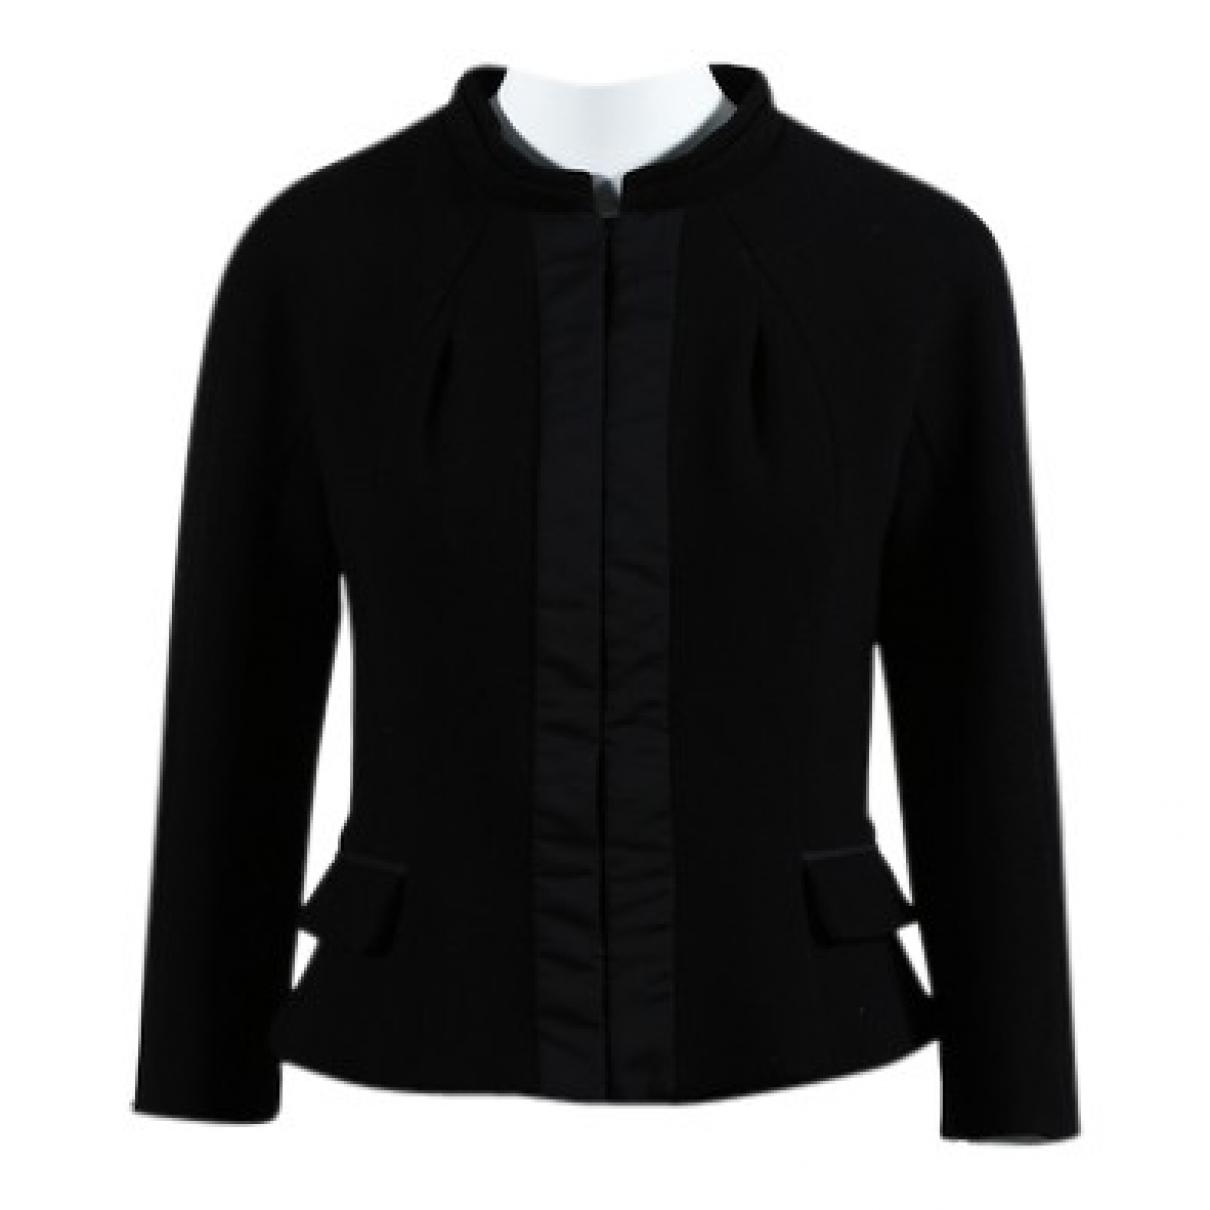 Lyst - Louis Vuitton Pre-owned Black Wool Jackets in Black